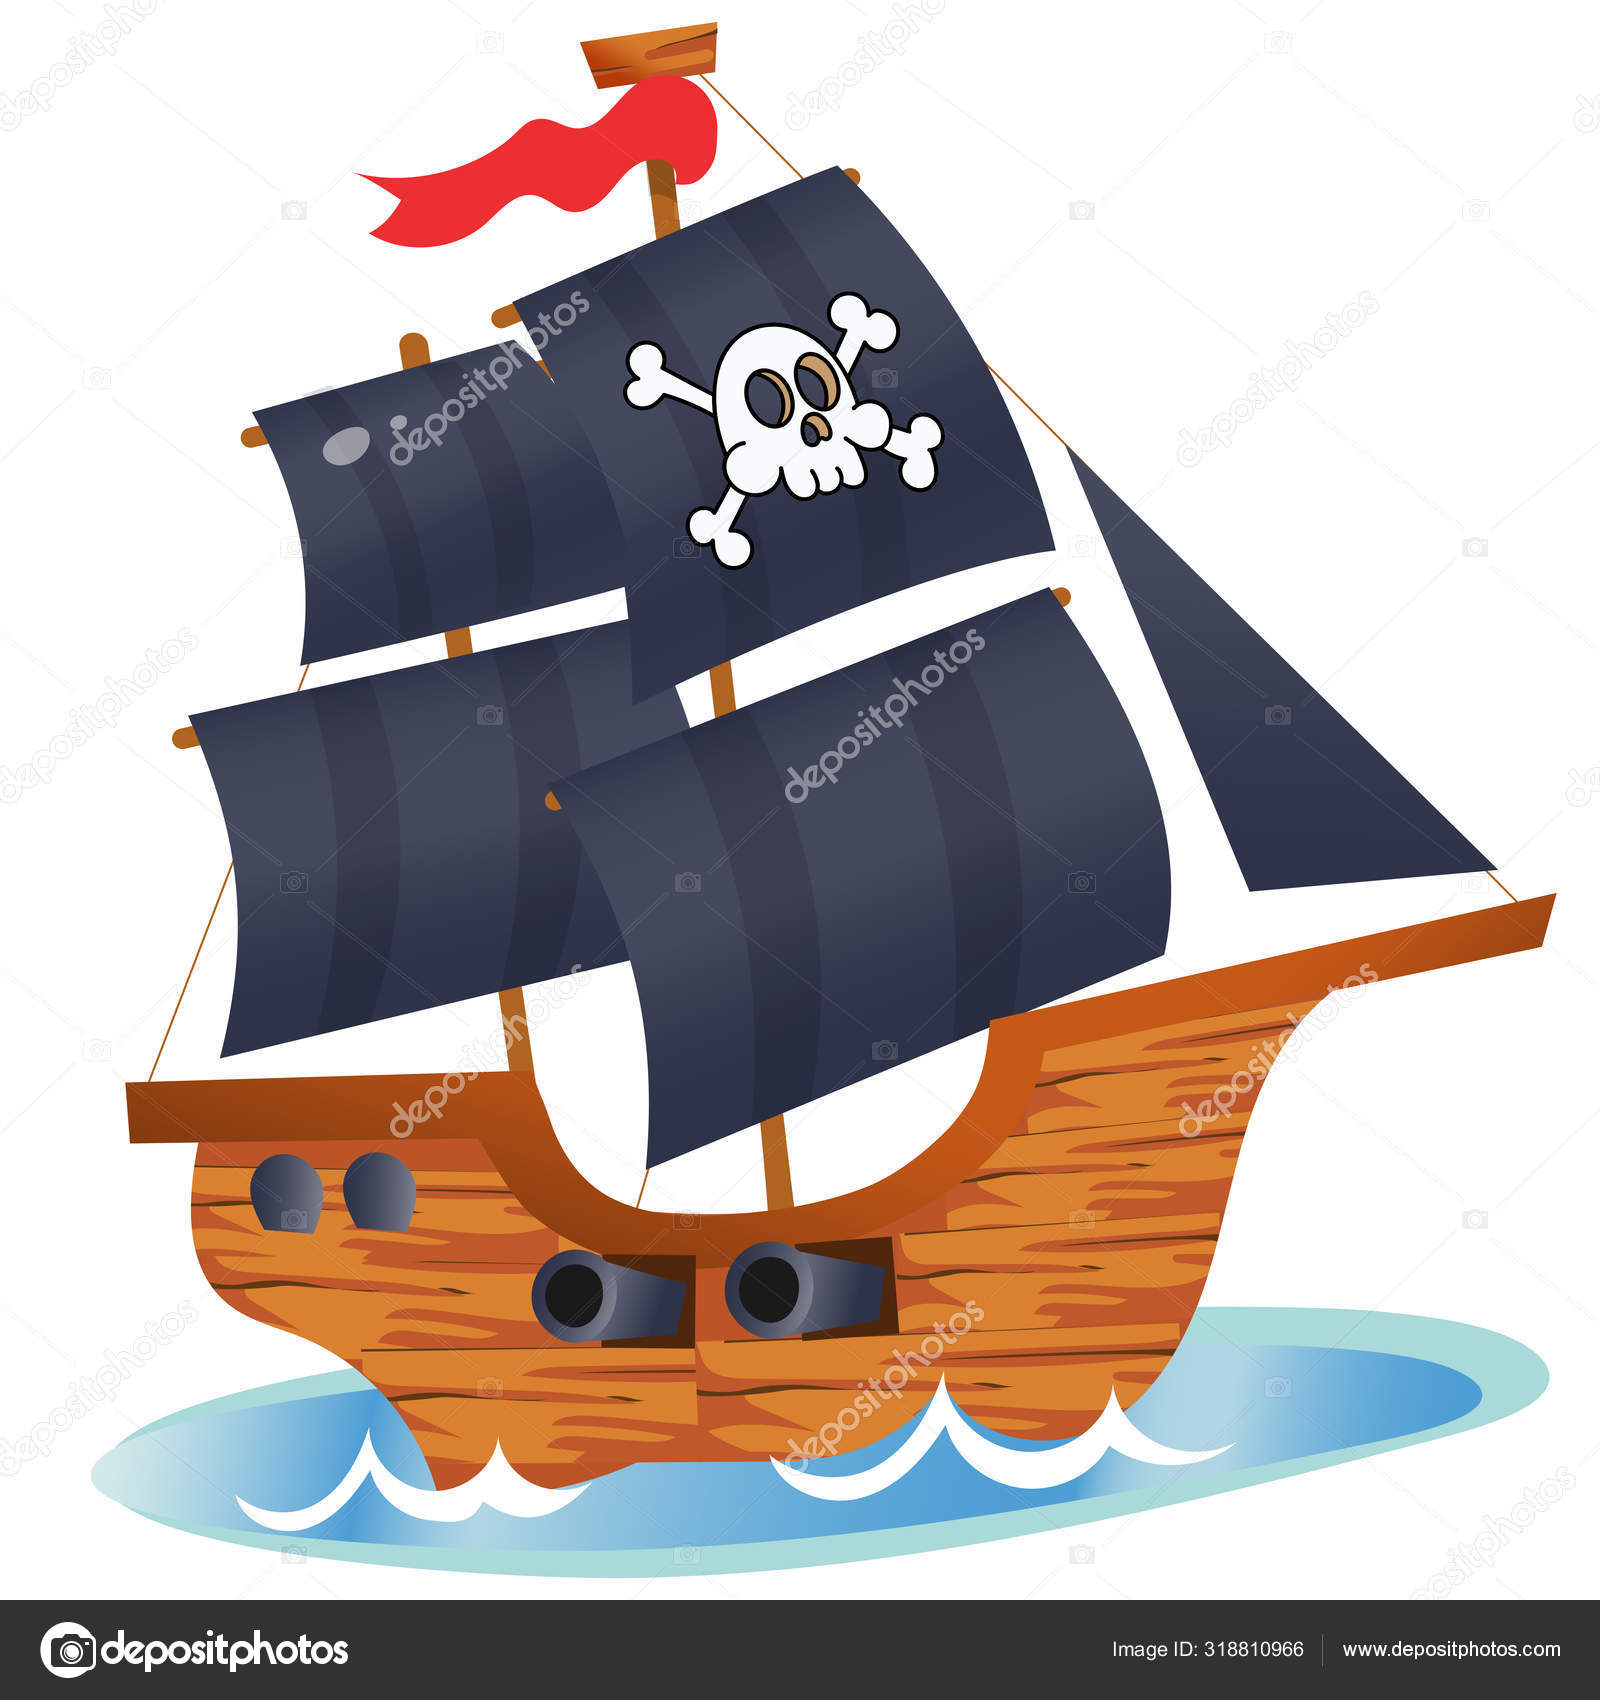 How To Draw A Pirate Ship Art Hub - img-Bagheera